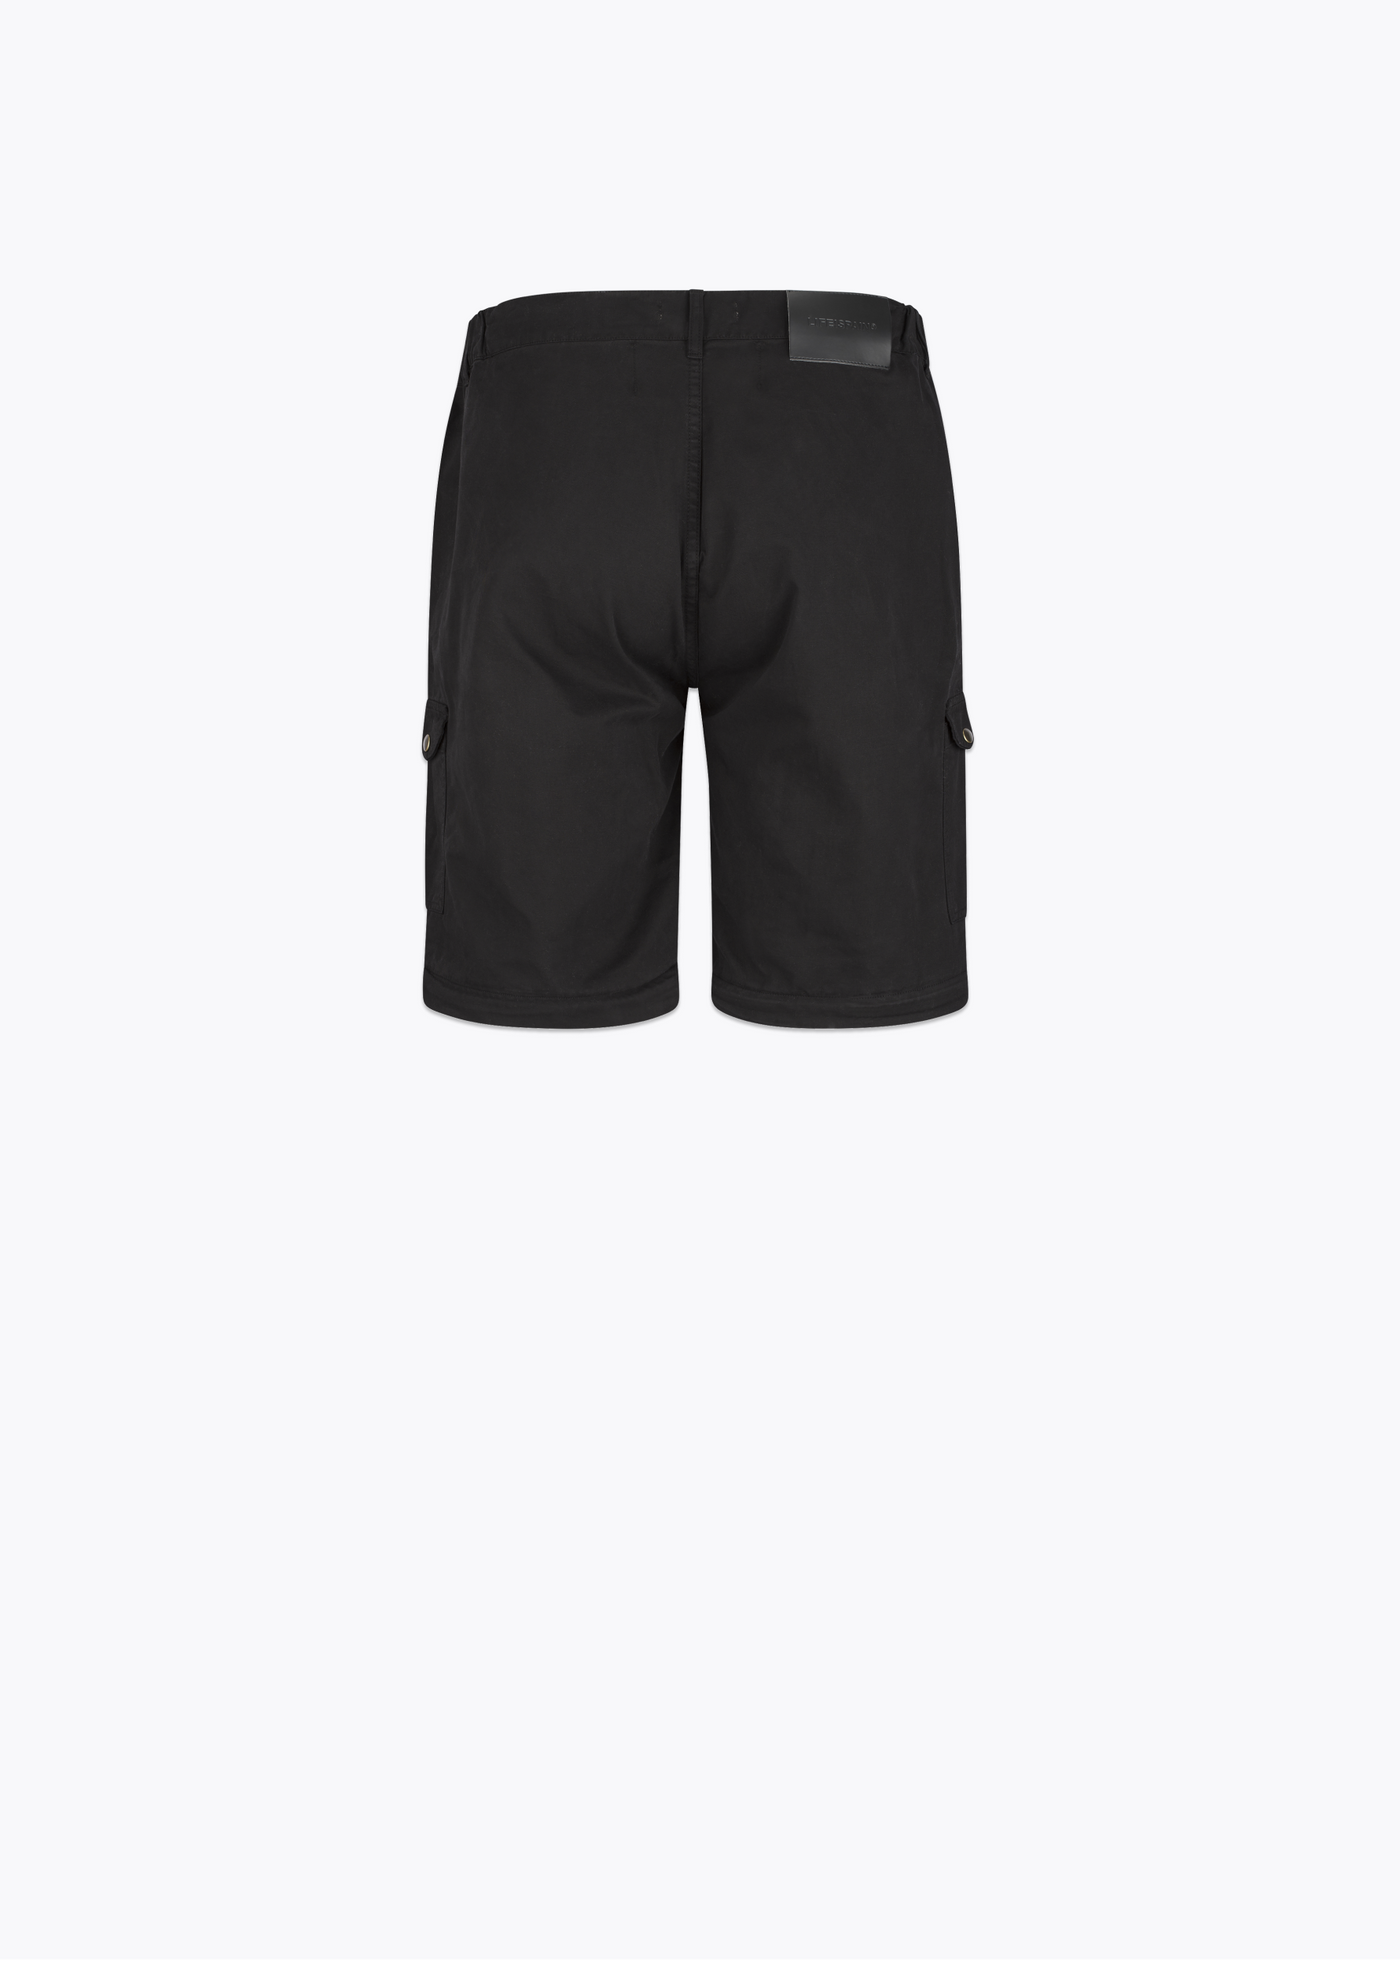 Schwarze Cargo Hose/Shorts